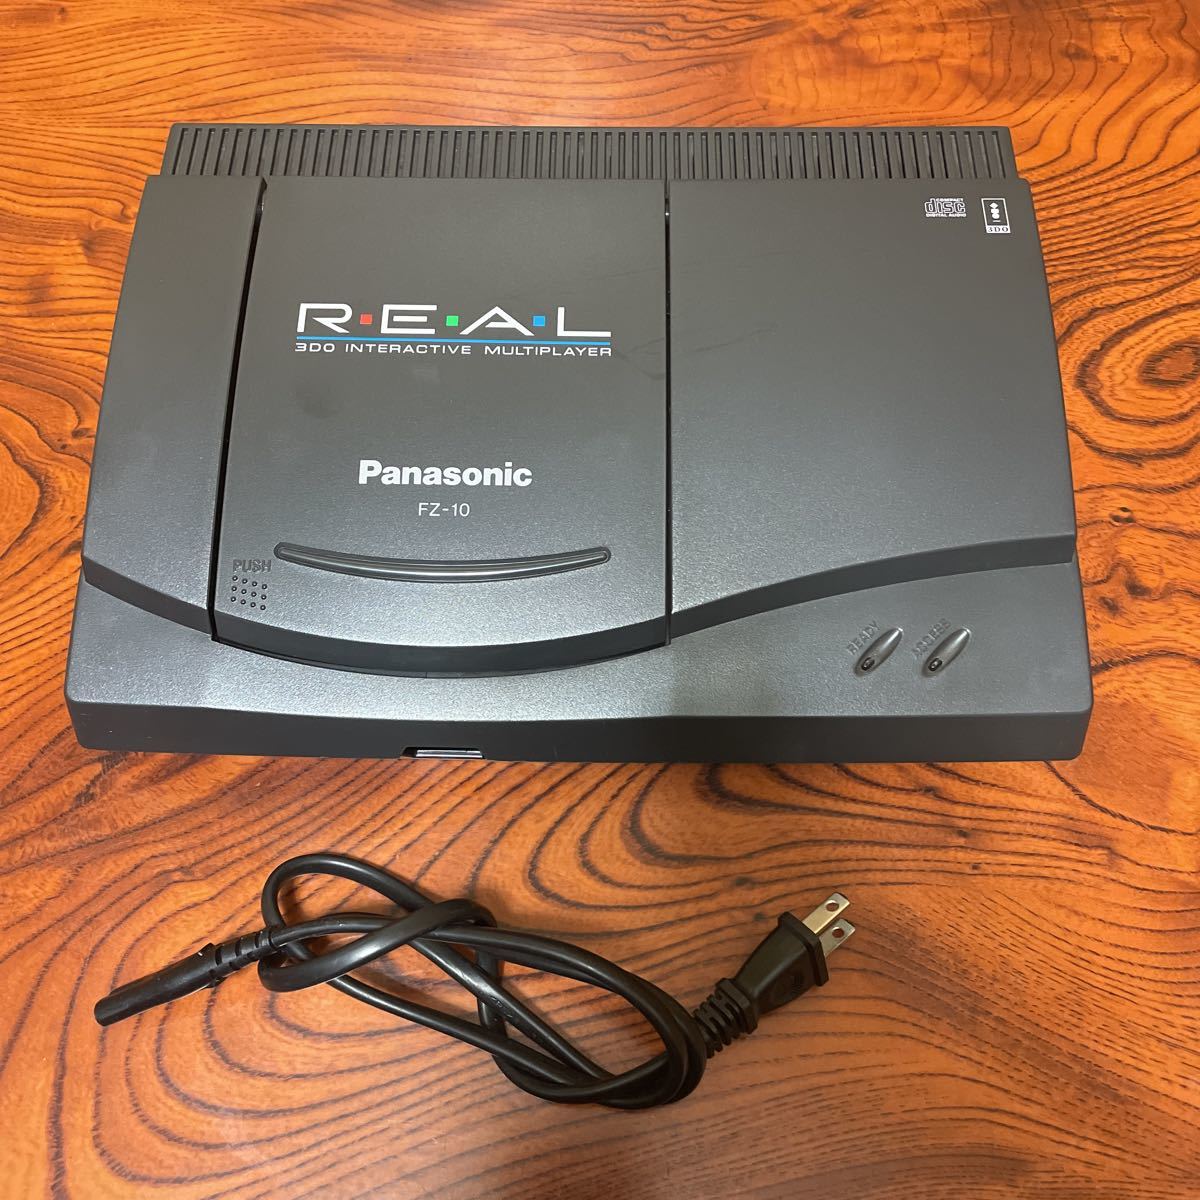 Panasonic 3DO REAL ソフトセット 家庭用ゲーム機本体 - maquillajeenoferta.com